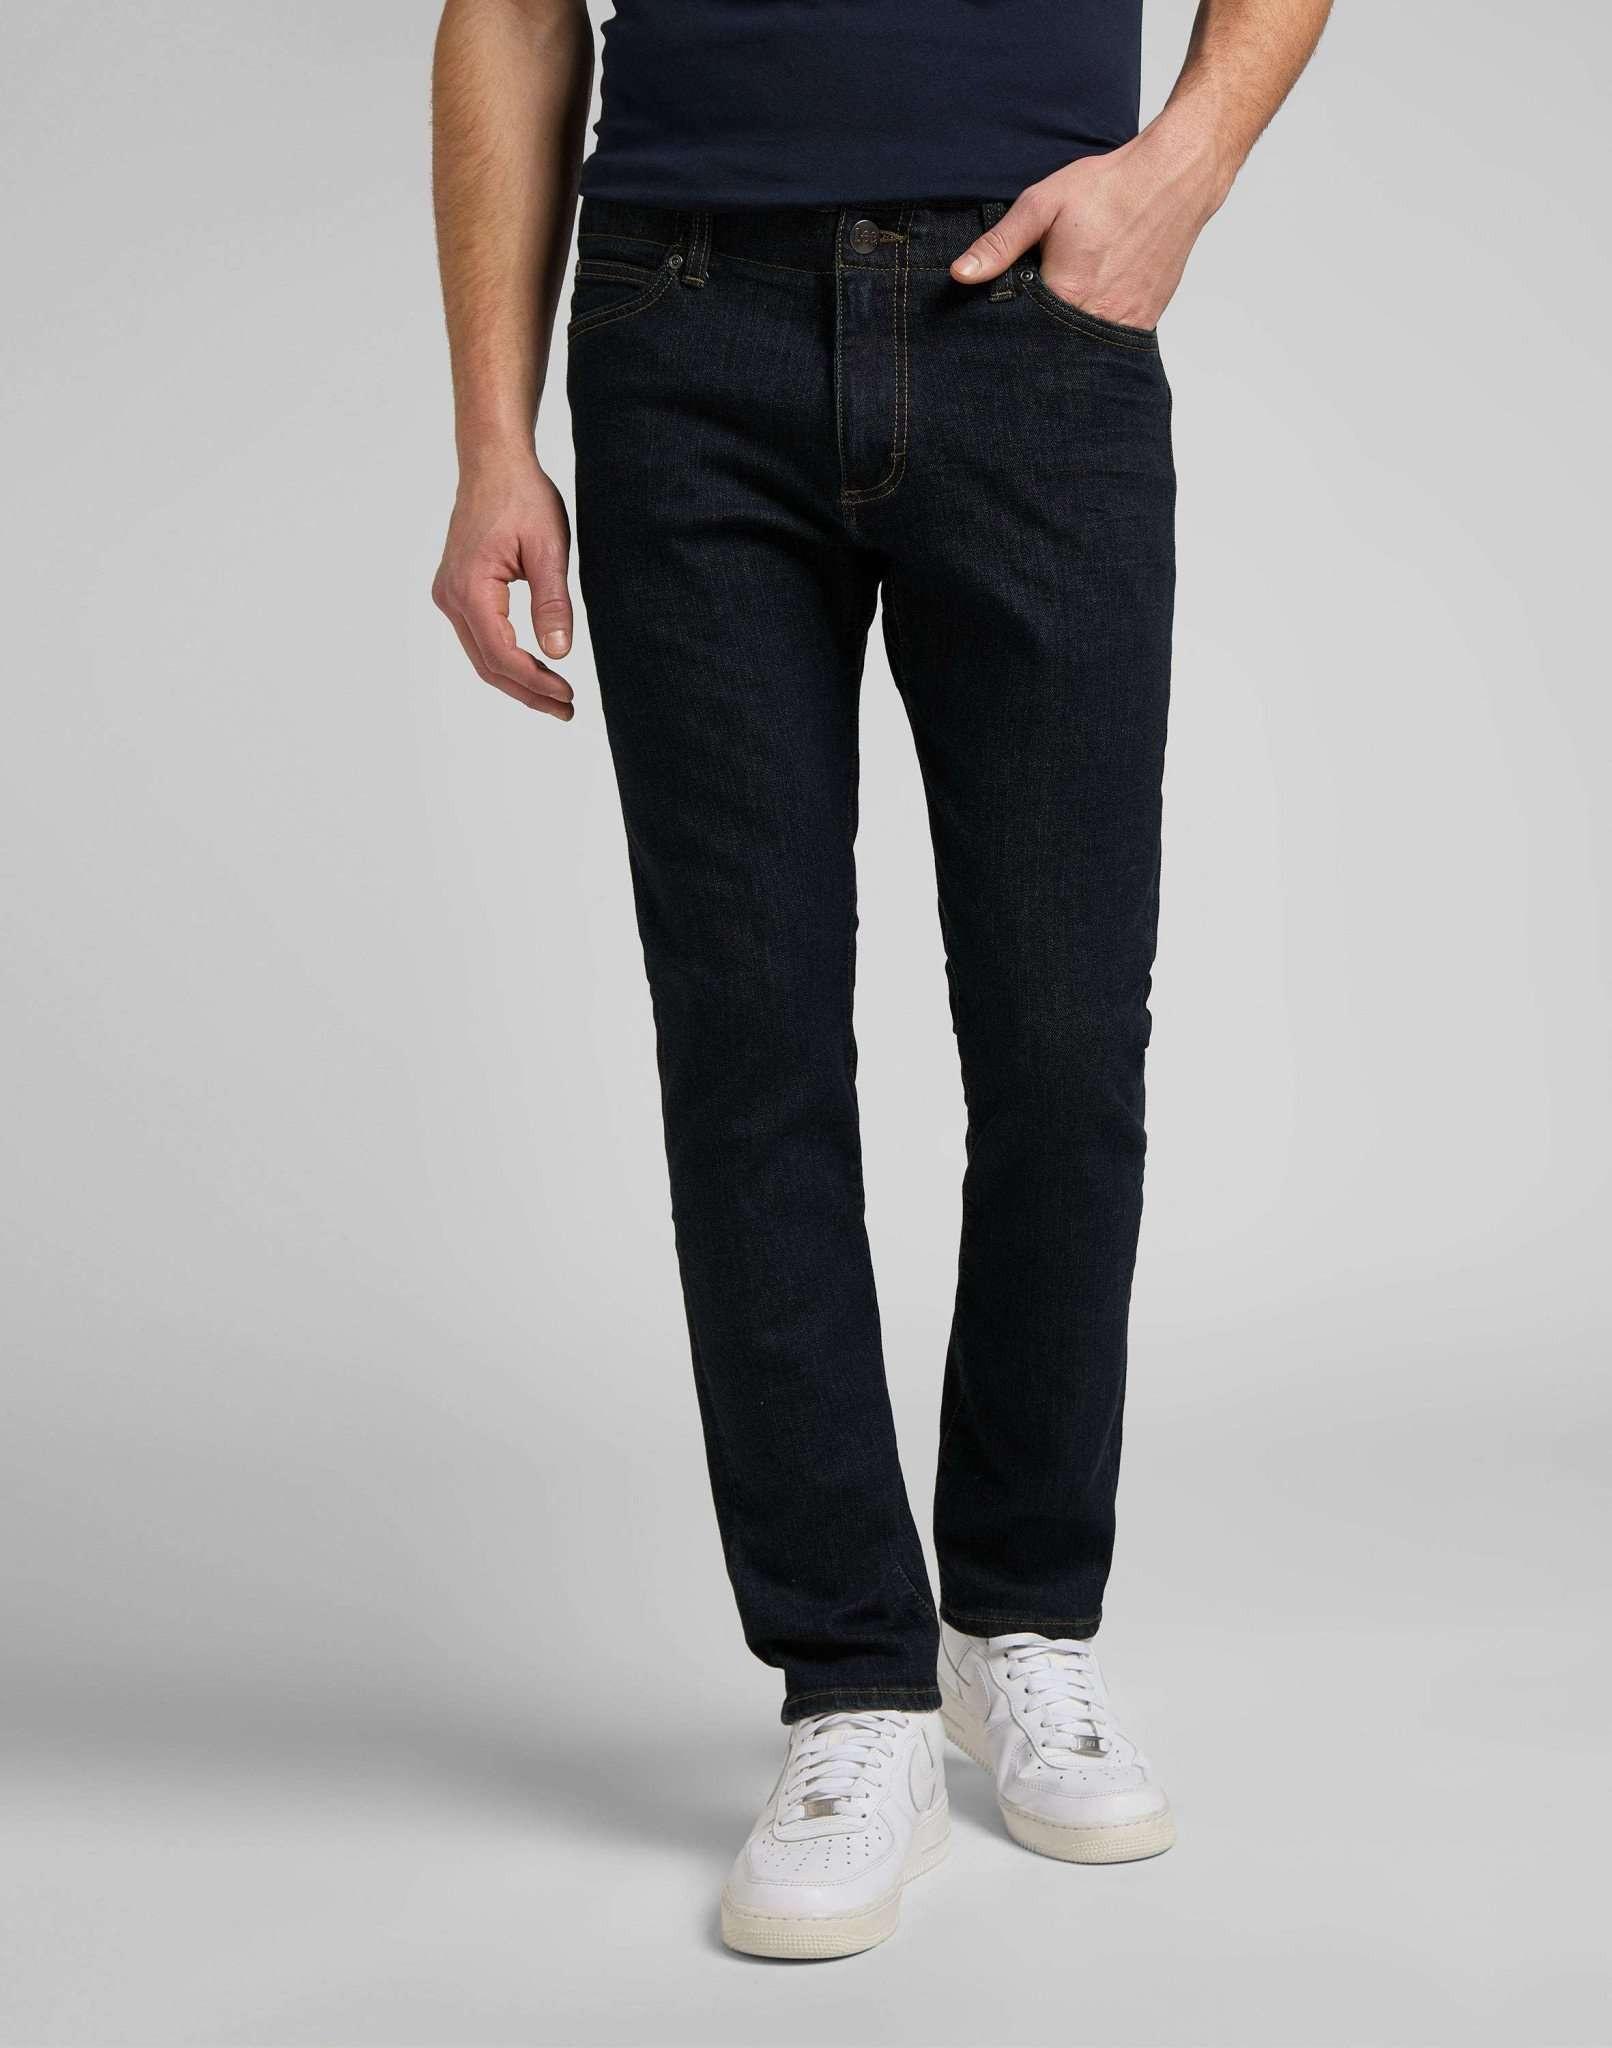 Jeans Skinny Fit Xm Herren Blau Denim L32/W33 von Lee